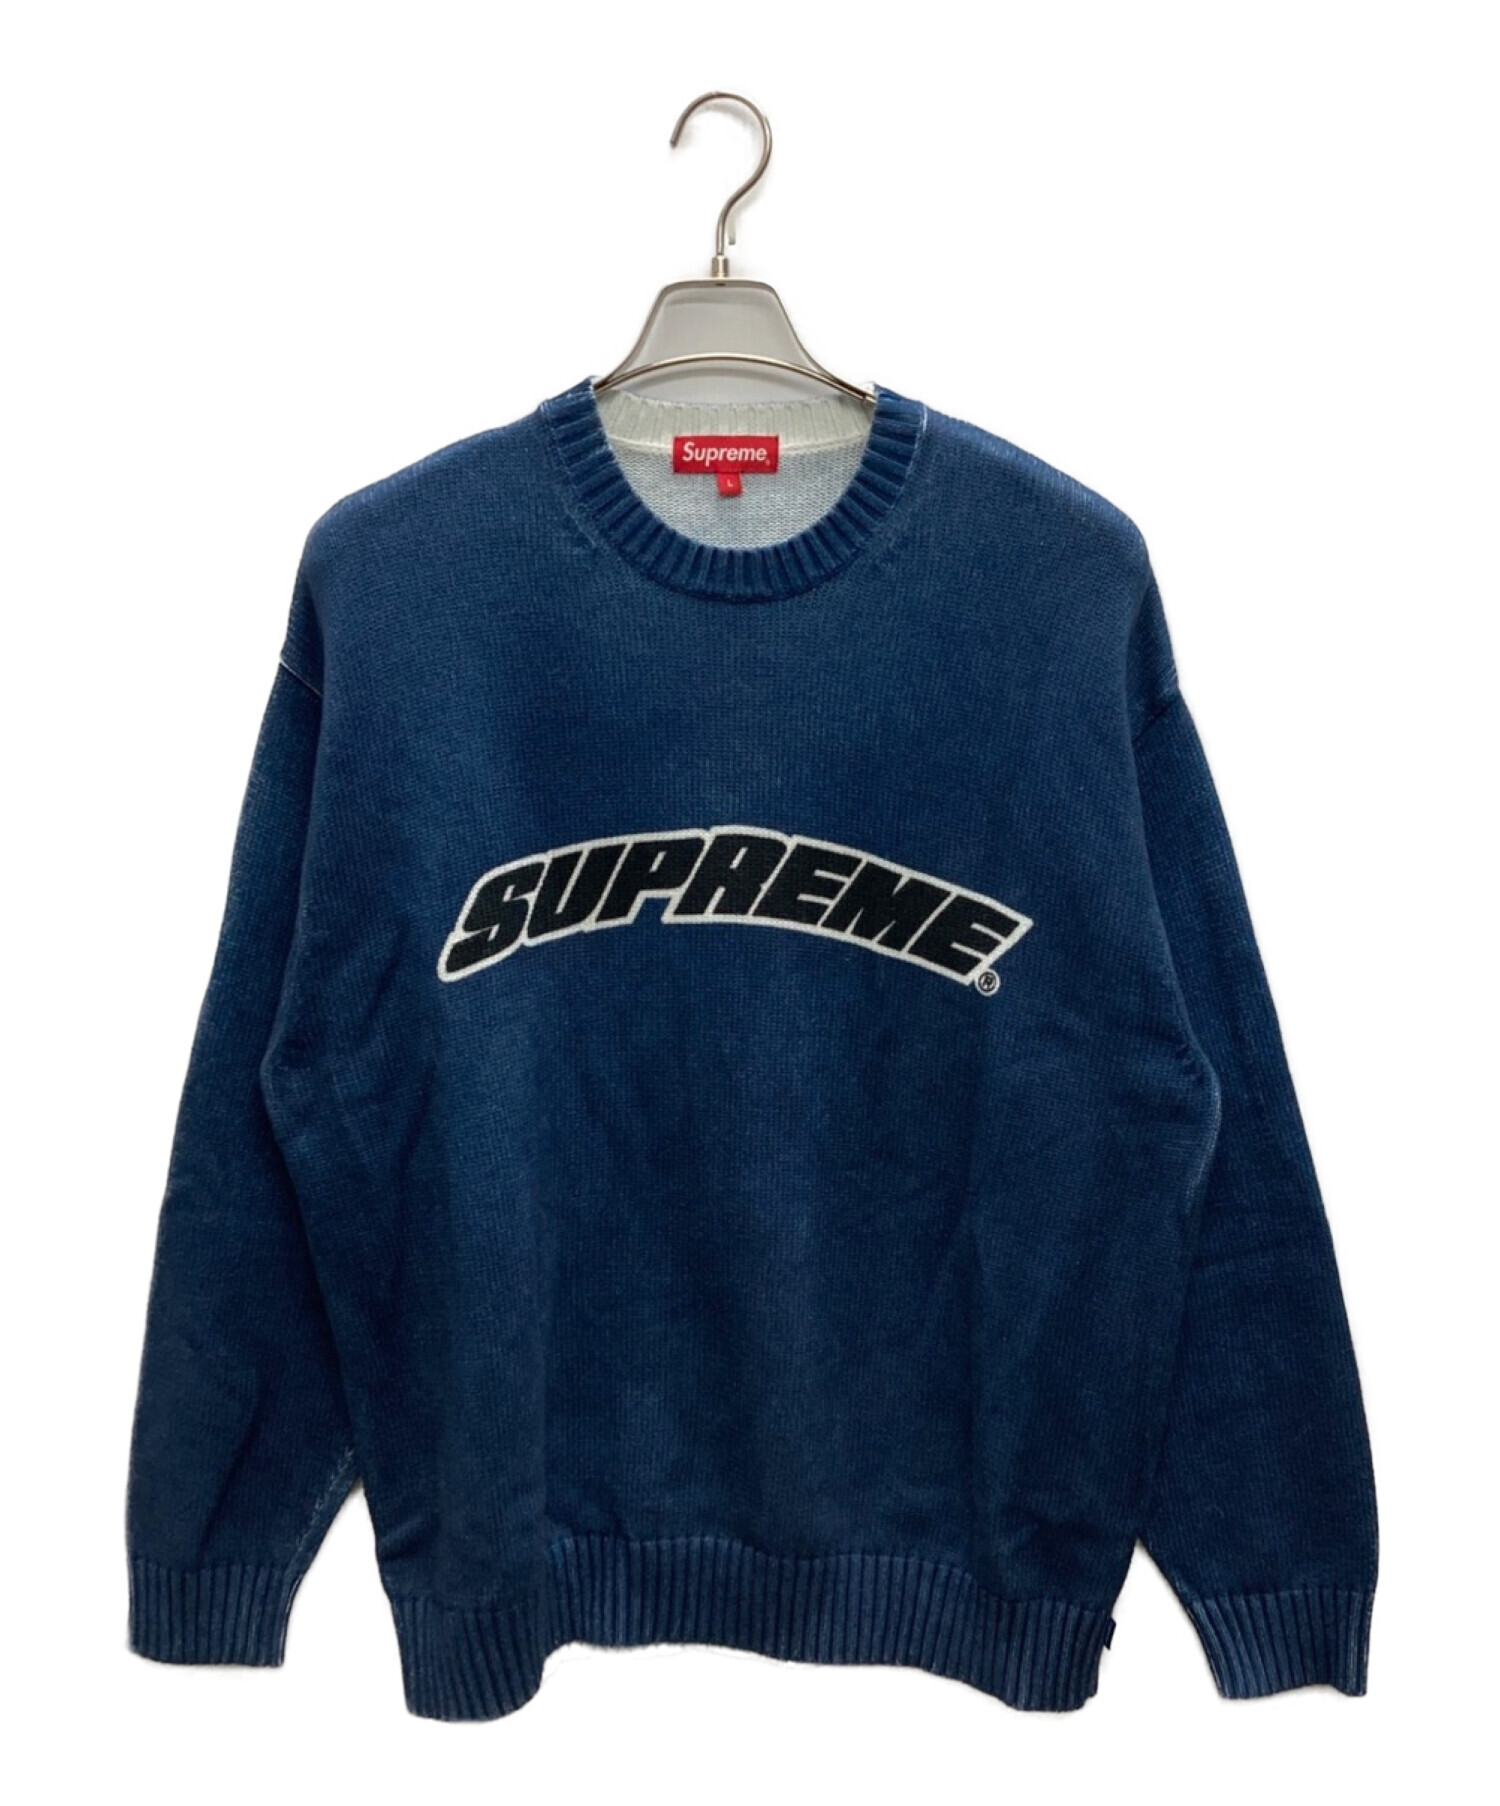 Supreme Printed Washed Sweater素材ニット